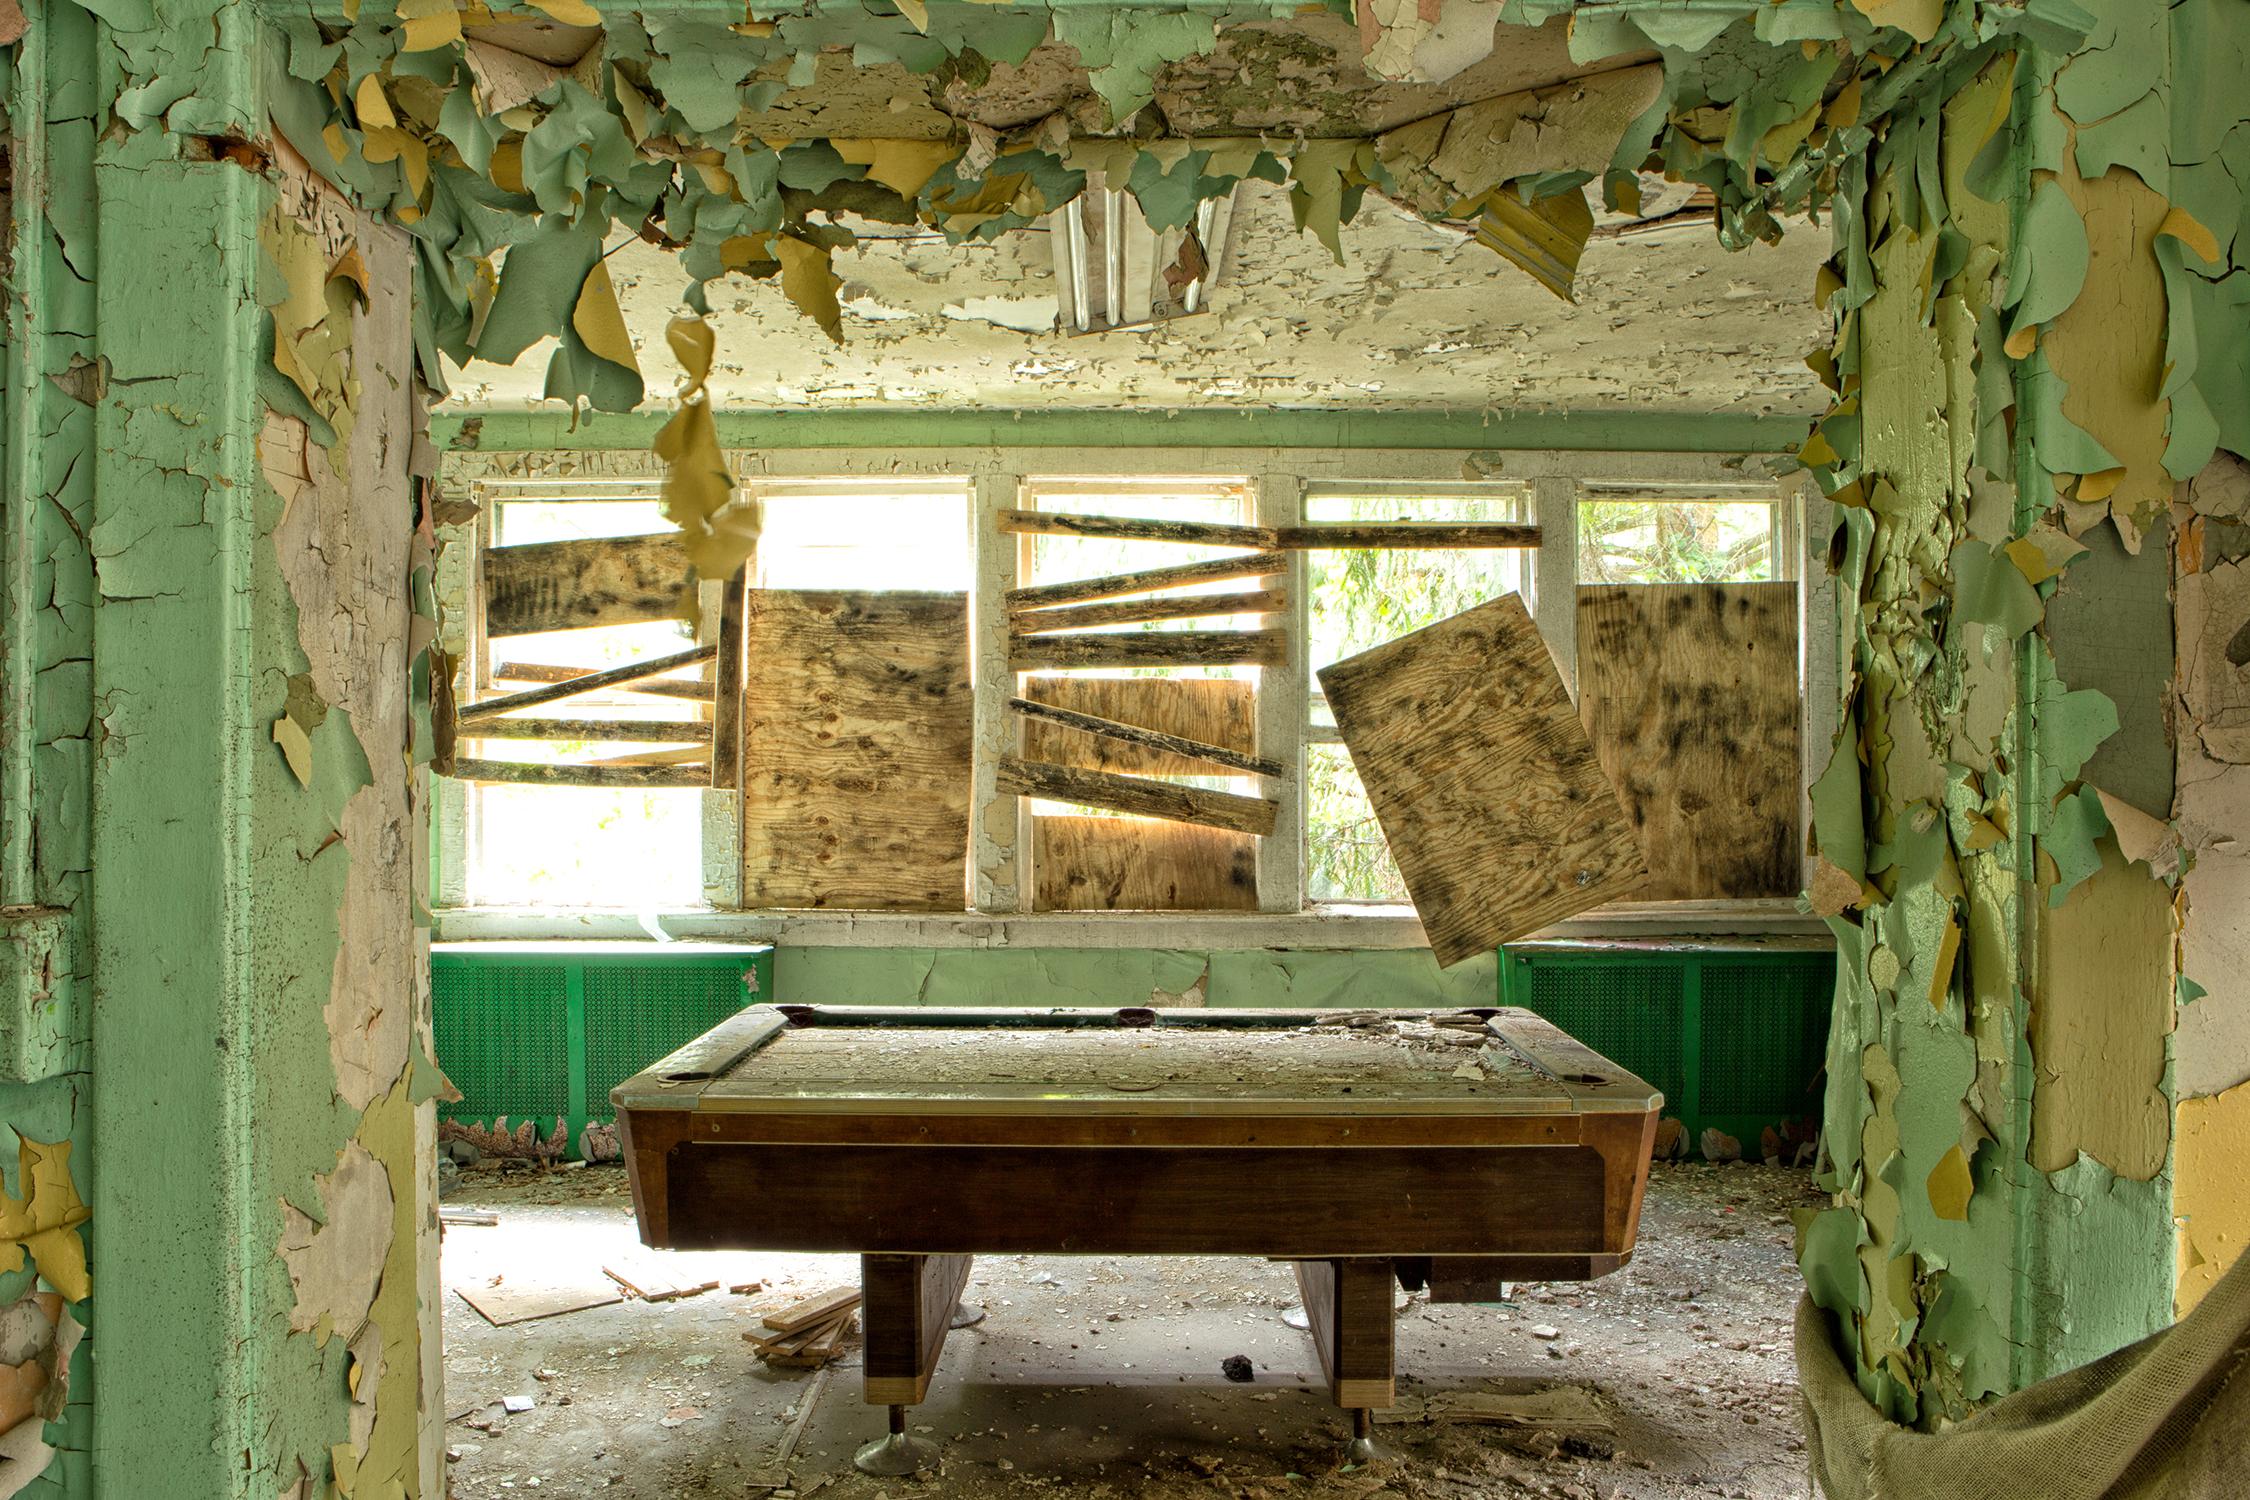 "Outward", abandonné, billard, peinture écaillée, intérieur, vert, photographie. - Photograph de Rebecca Skinner